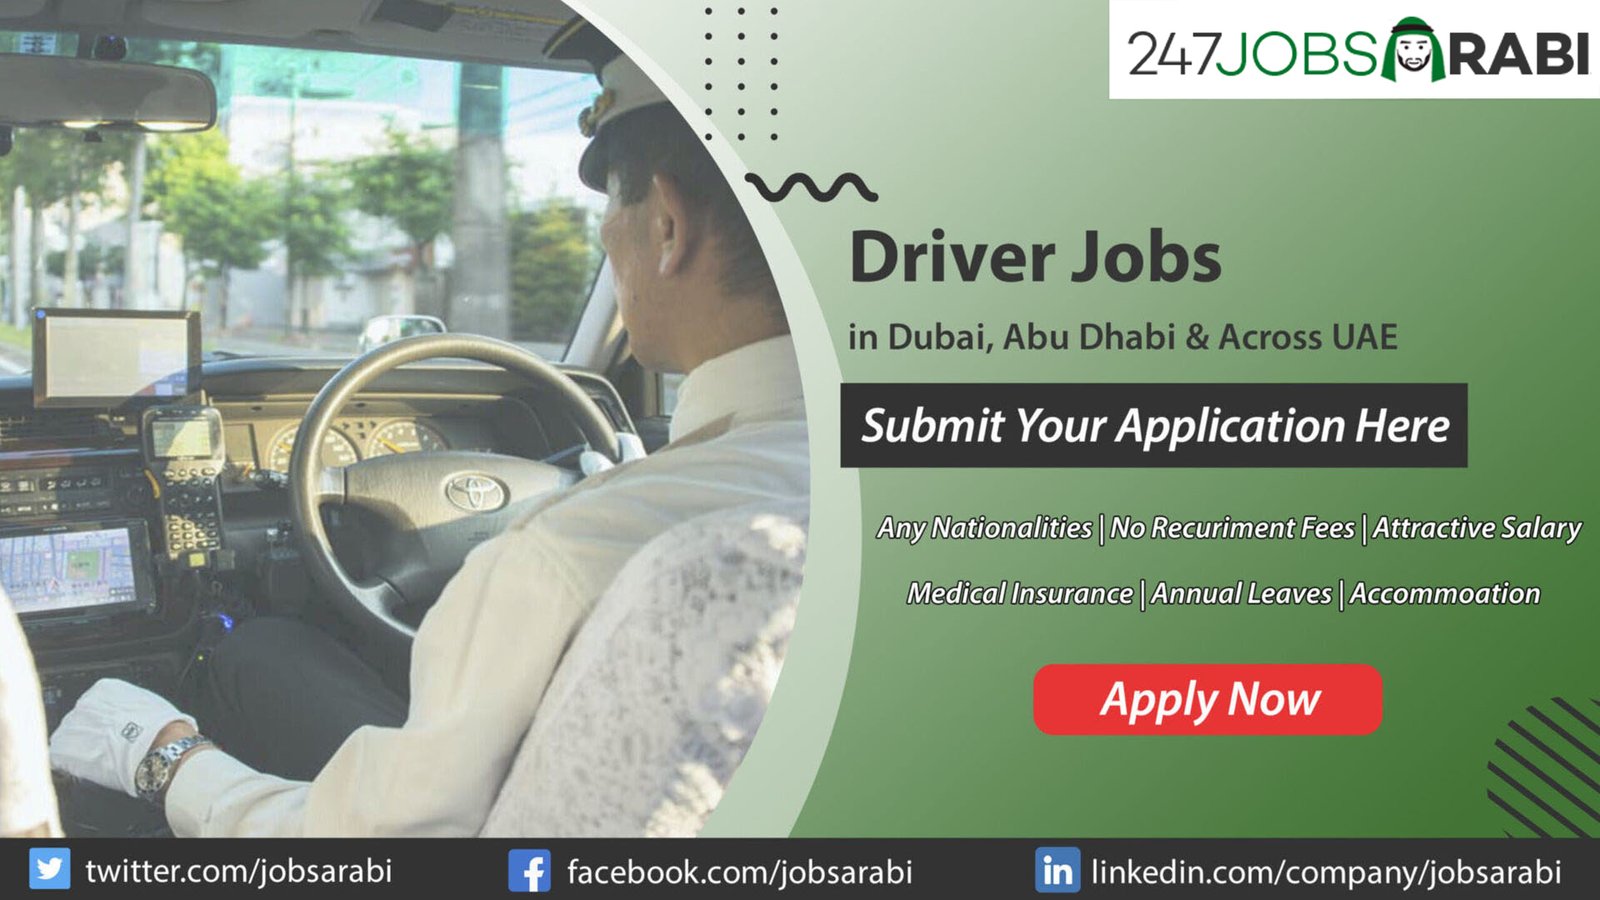 Driver jobs in Dubai